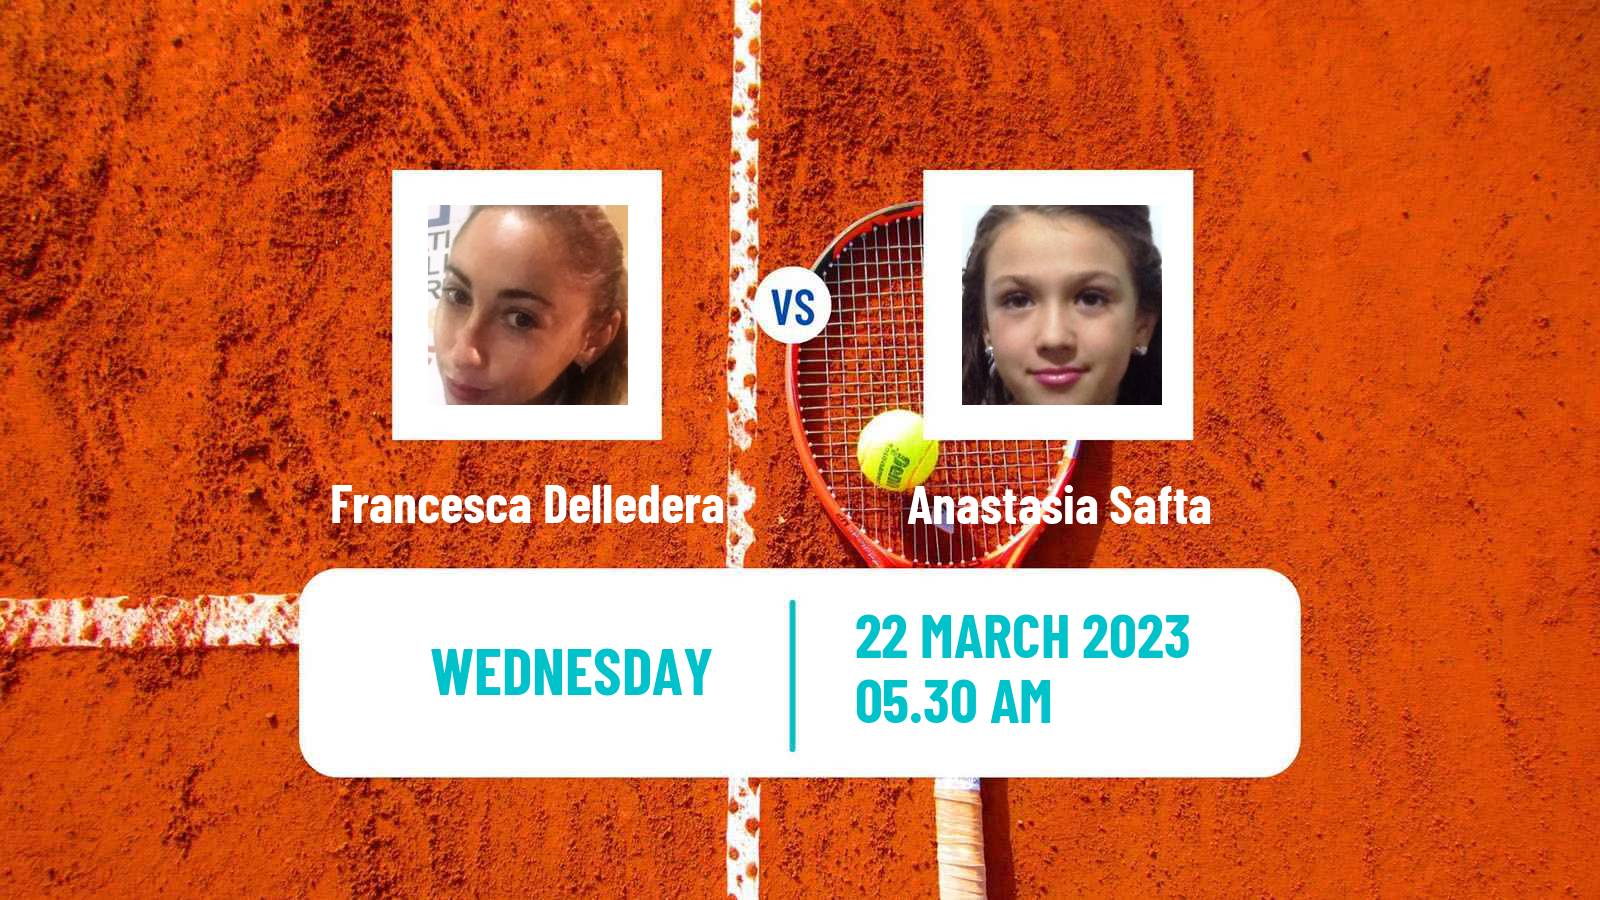 Tennis ITF Tournaments Francesca Dell'edera - Anastasia Safta